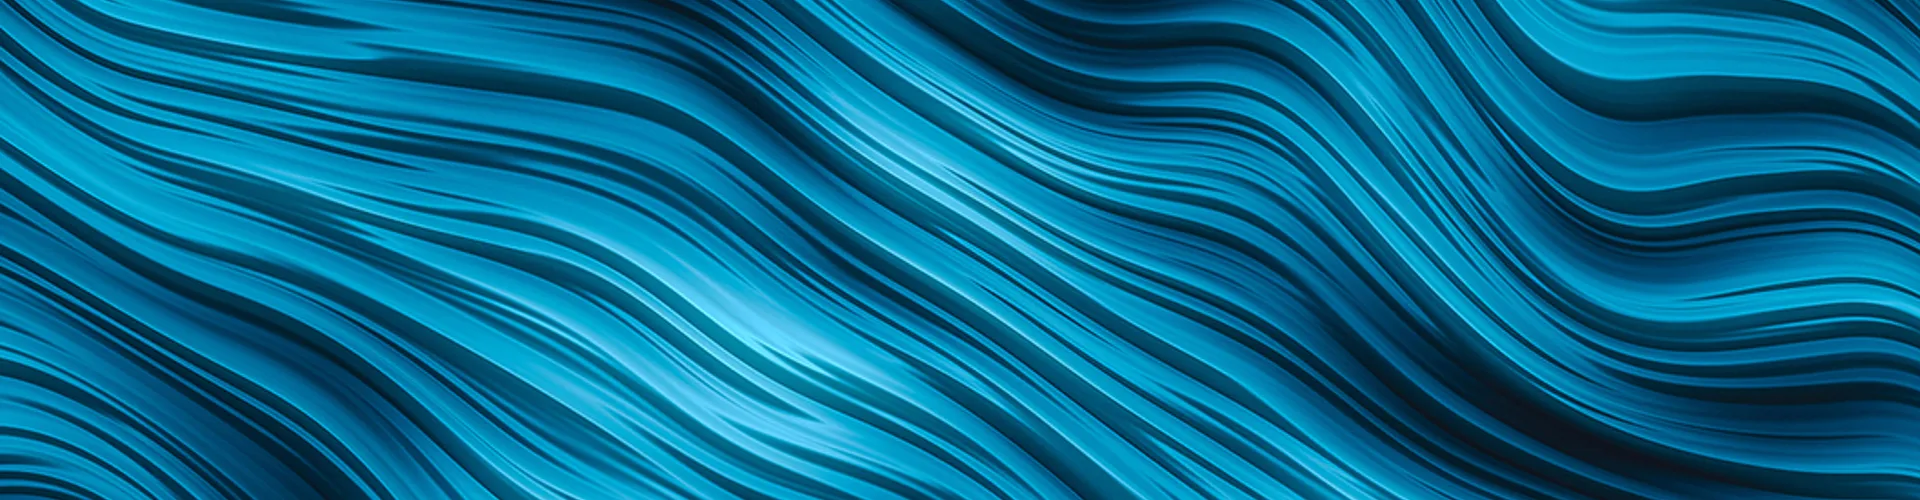 Abstract Water Aqua Blue Sea Wave Background. Wavy Pattern. Ocean waves